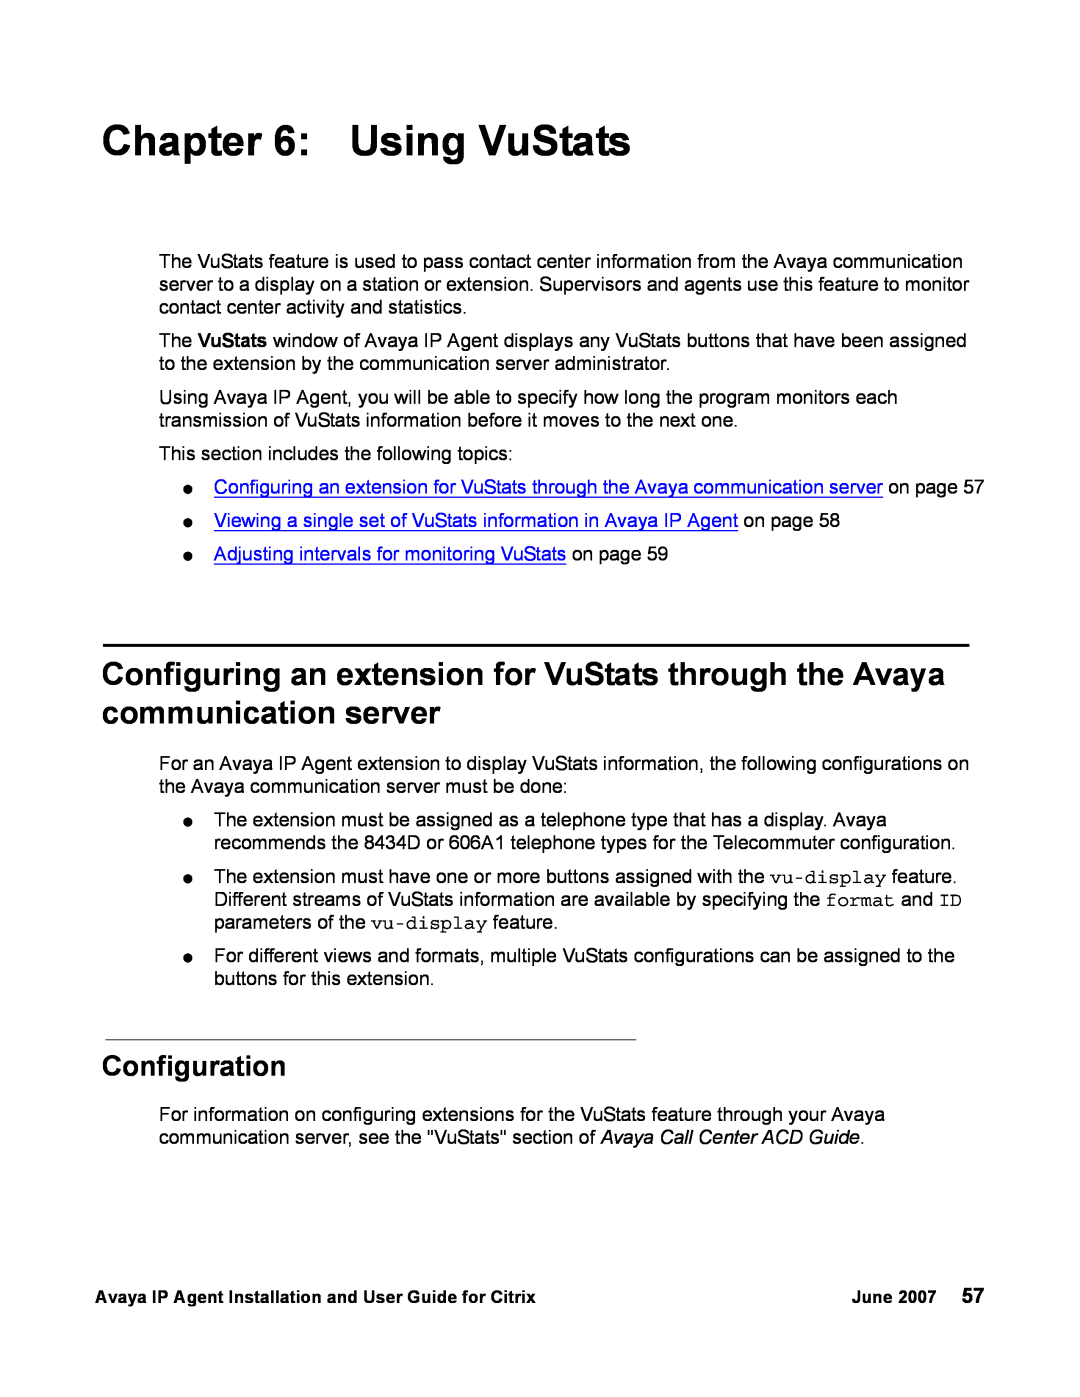 Avaya 7 manual Using VuStats, Configuration, Viewing a single set of VuStats information in Avaya IP Agent on page 